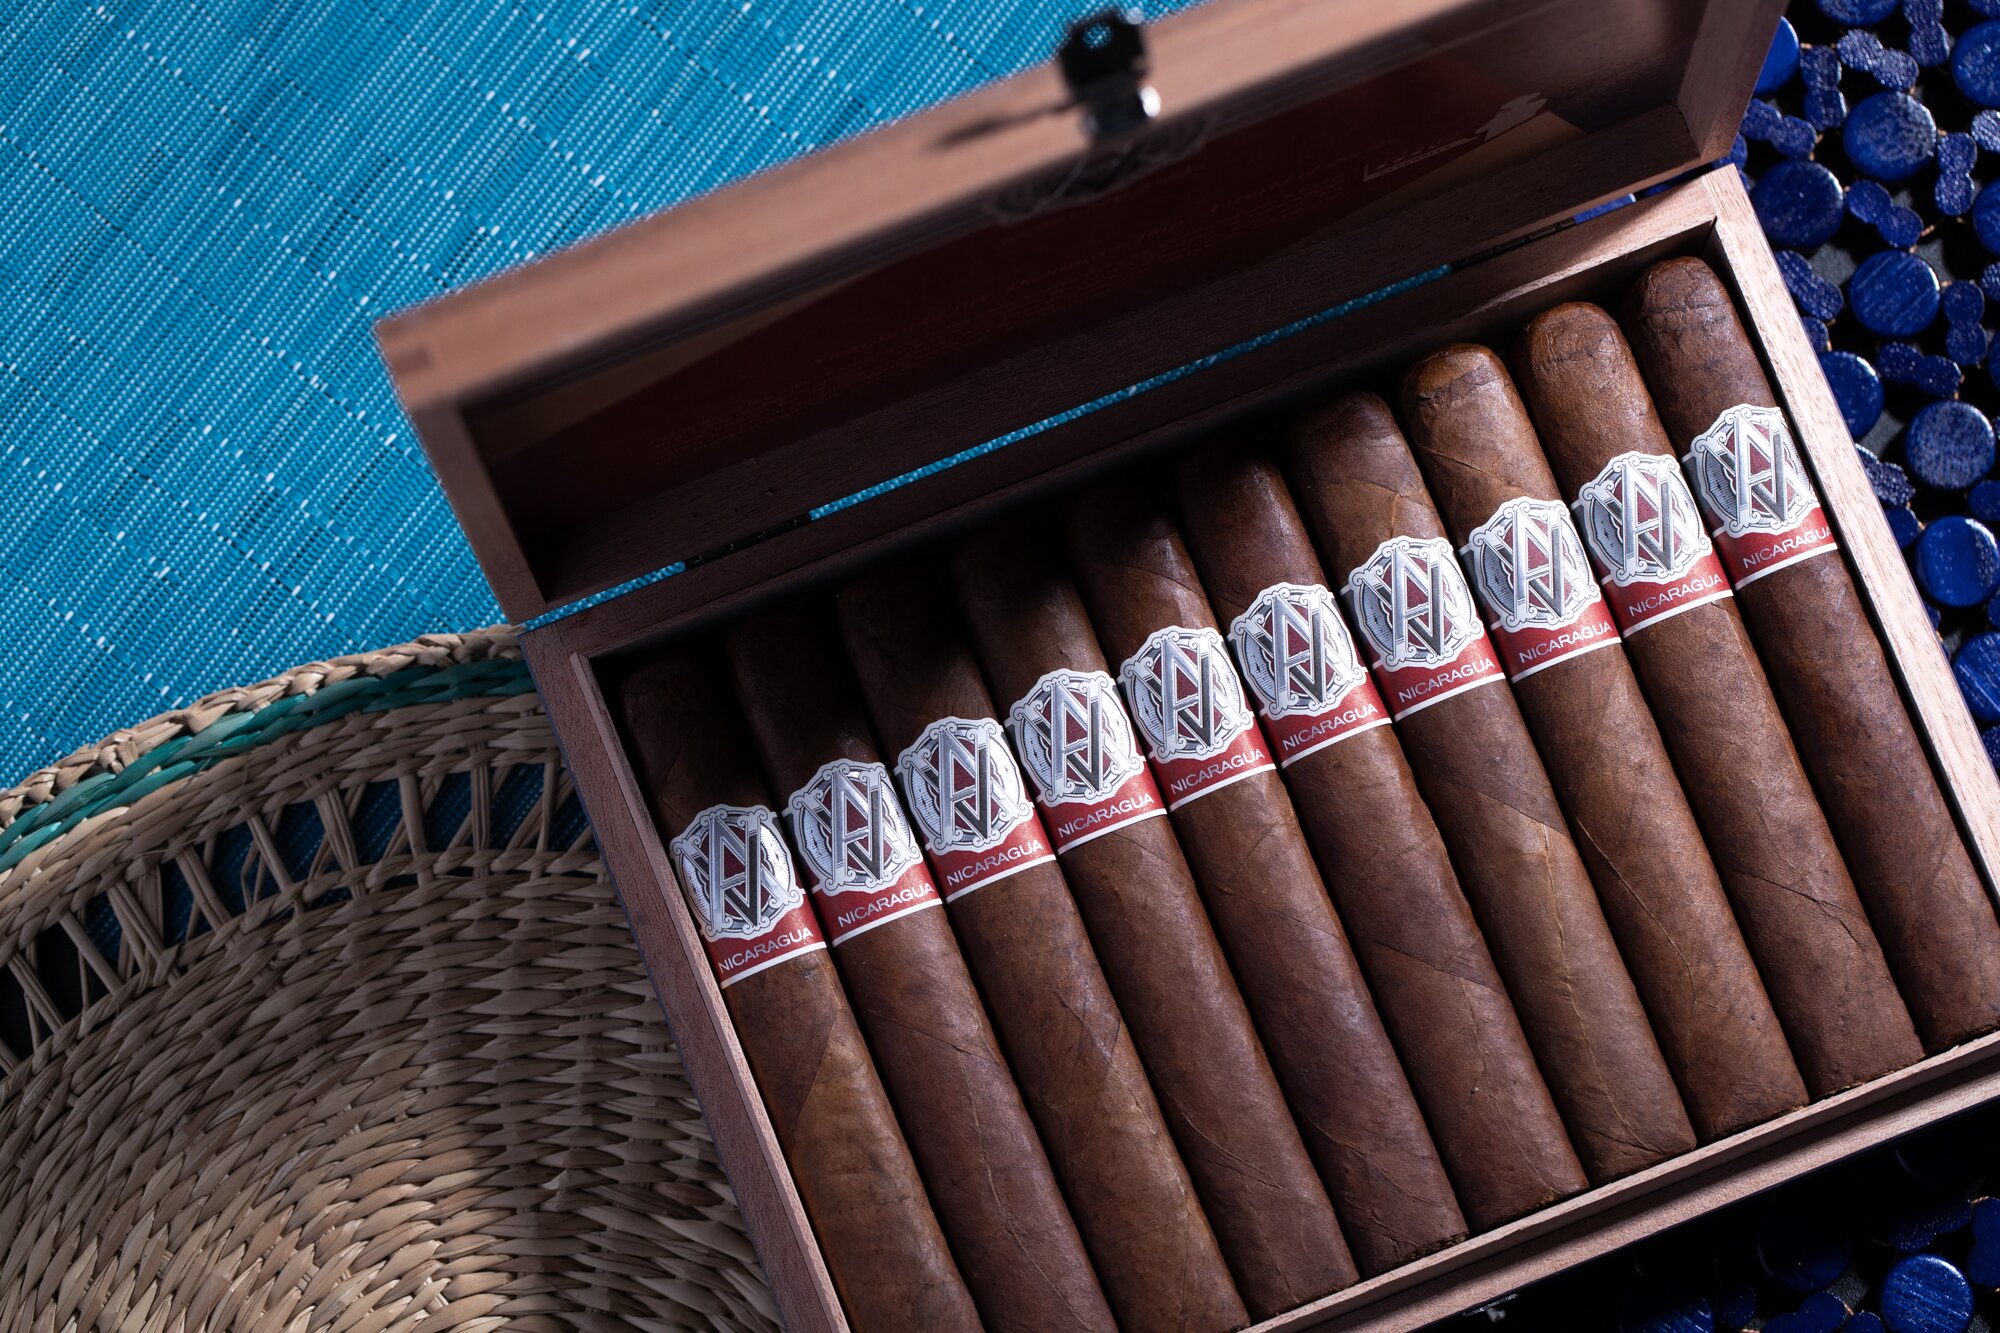 Open Box of AVO Syncro Nicaragua cigars